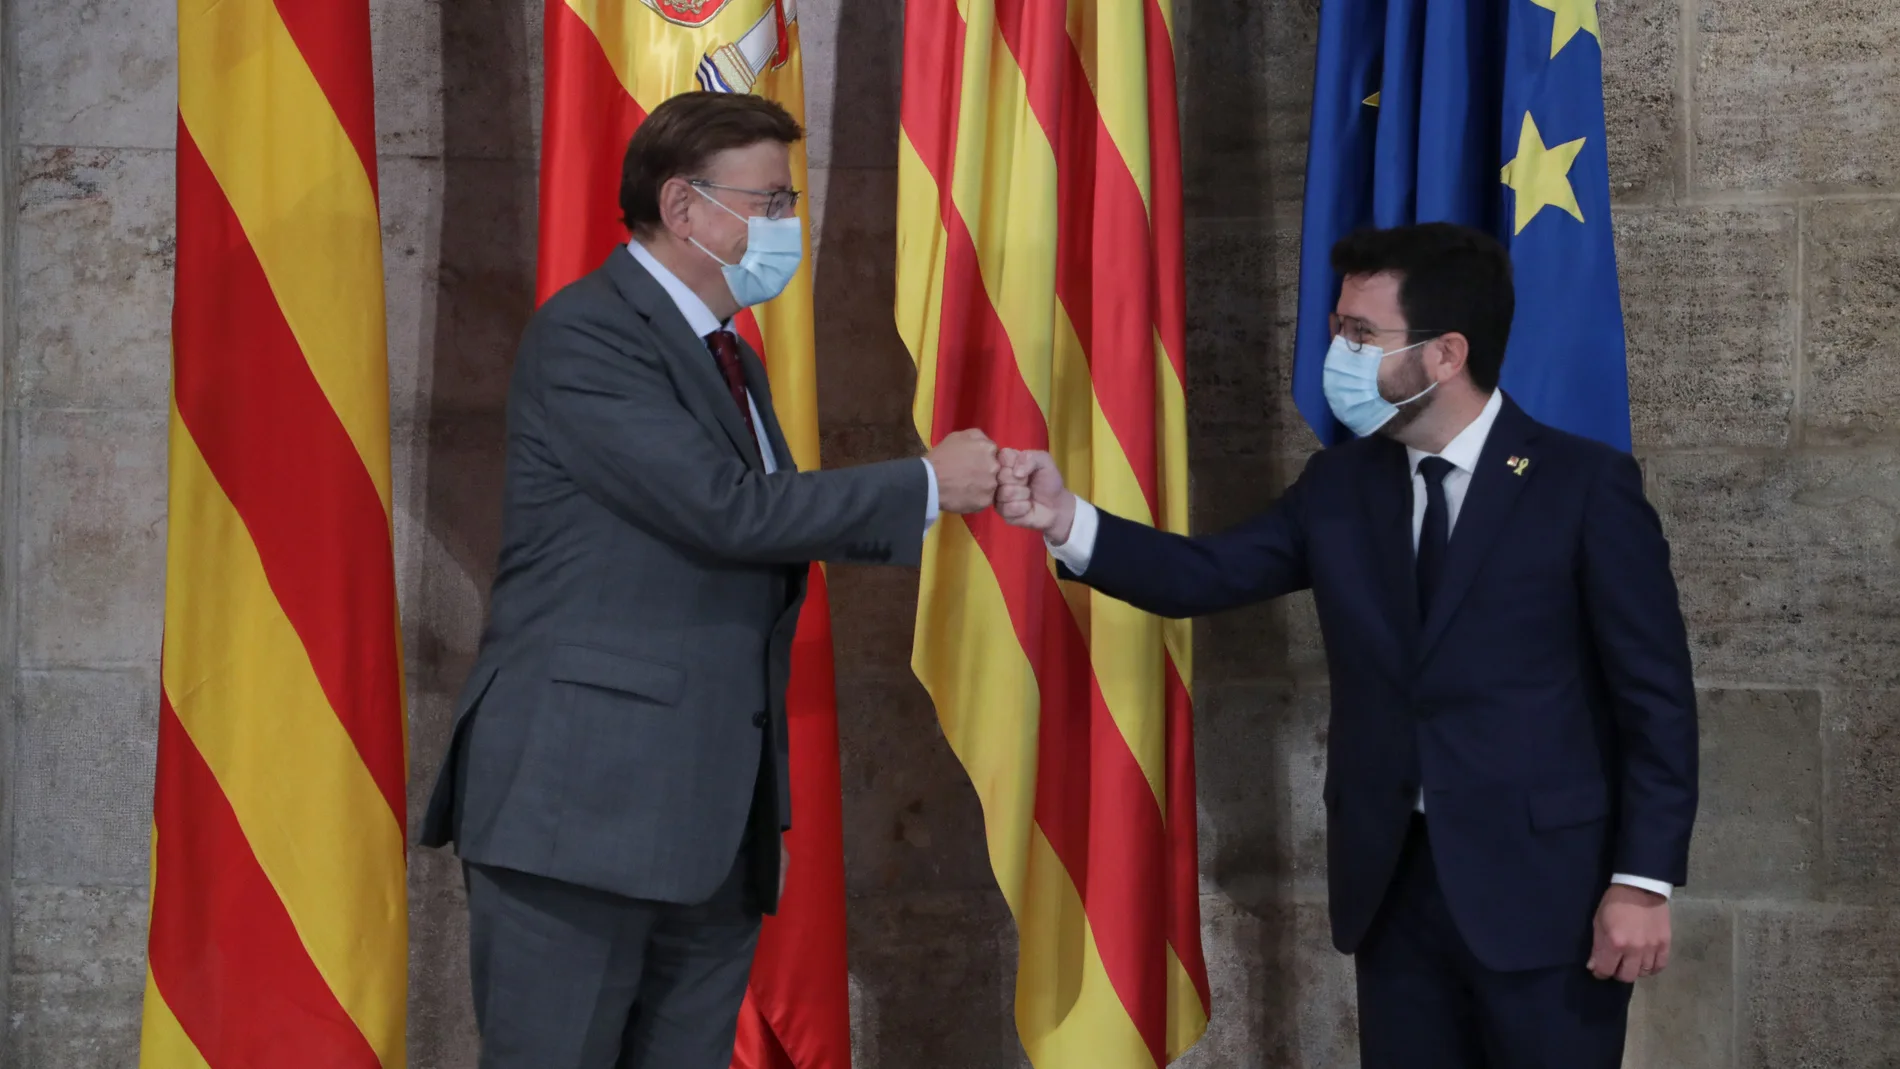 El presidente de la Generalitat valenciana, Ximo Puig, y el presidente de la Generalitat de Cataluña, Pere Aragonés, esta mañana en Valencia